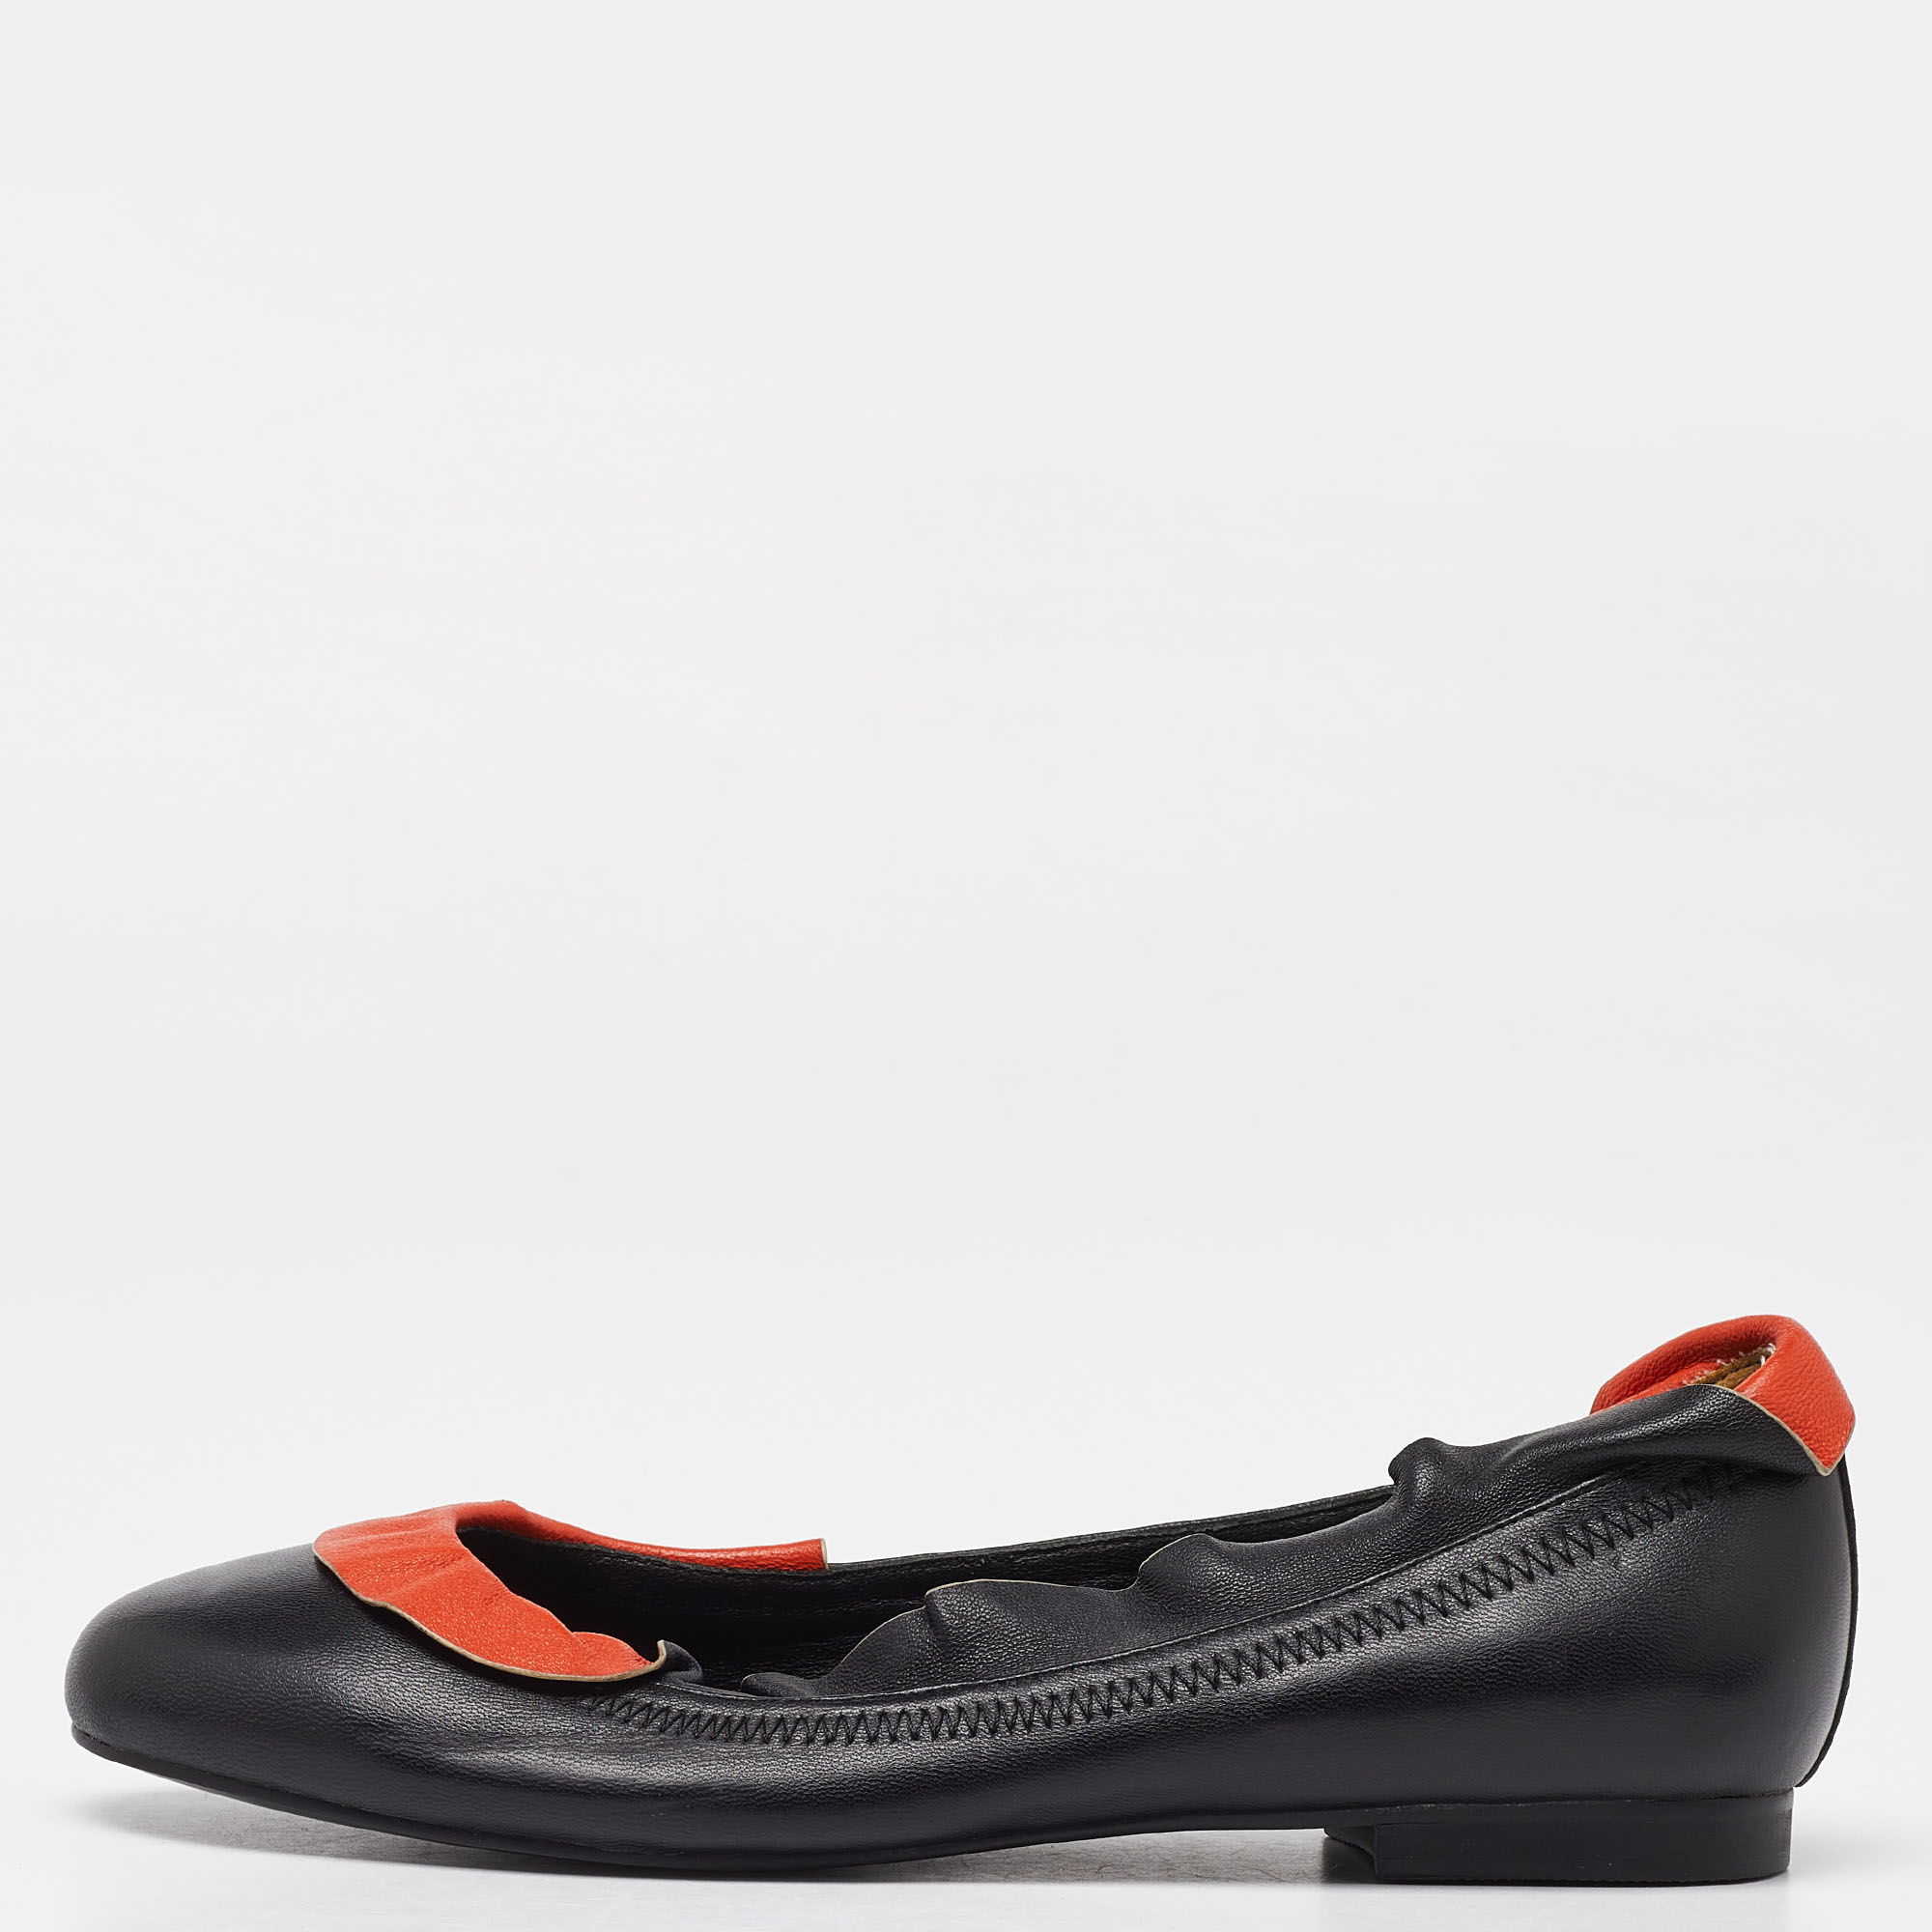 Fendi black/orange leather ruffle trim ballet flats size 39